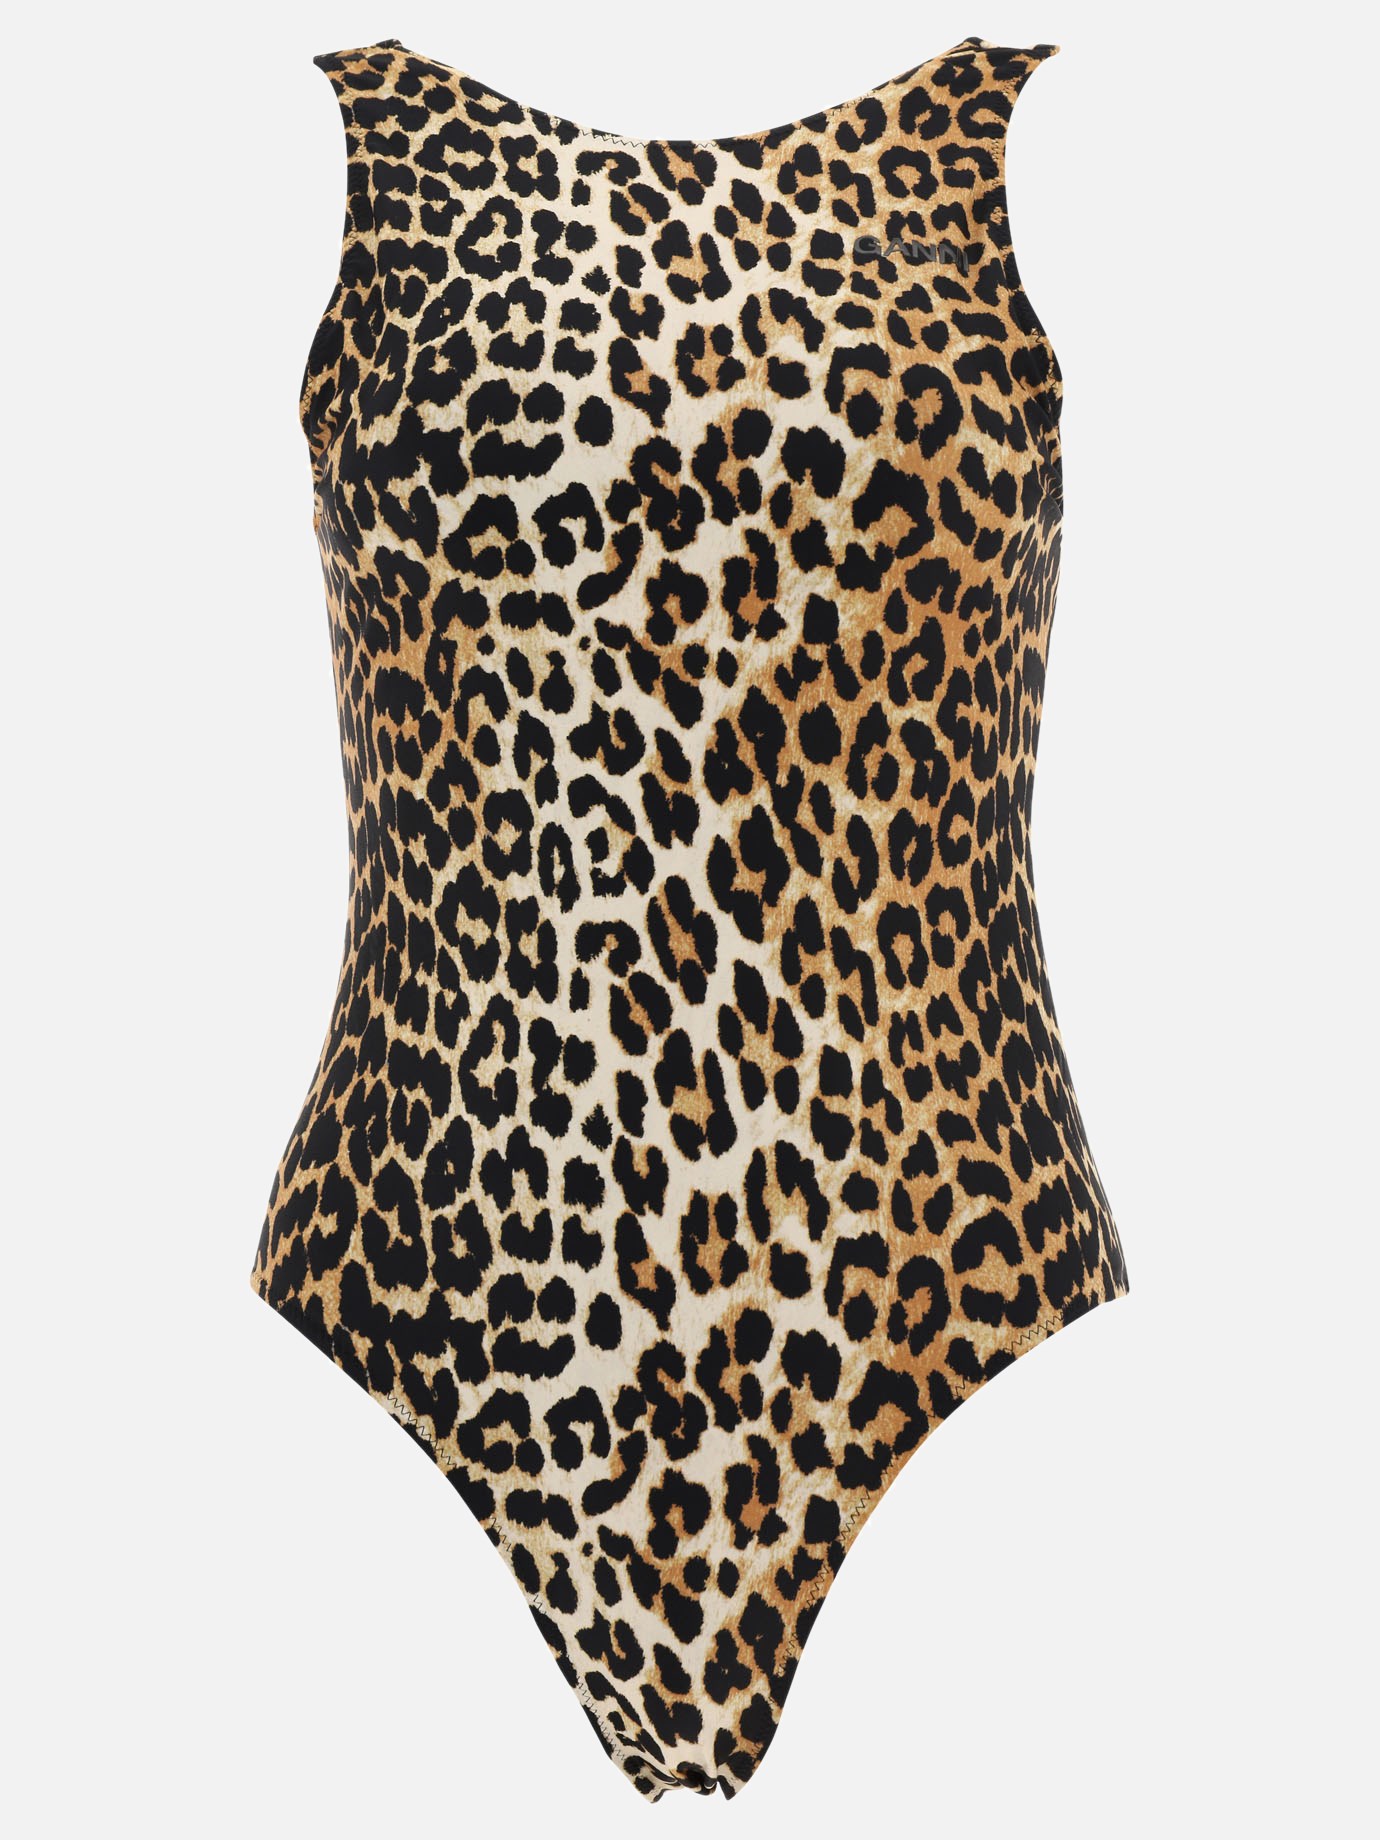 Leopard print one-piece swimsuit